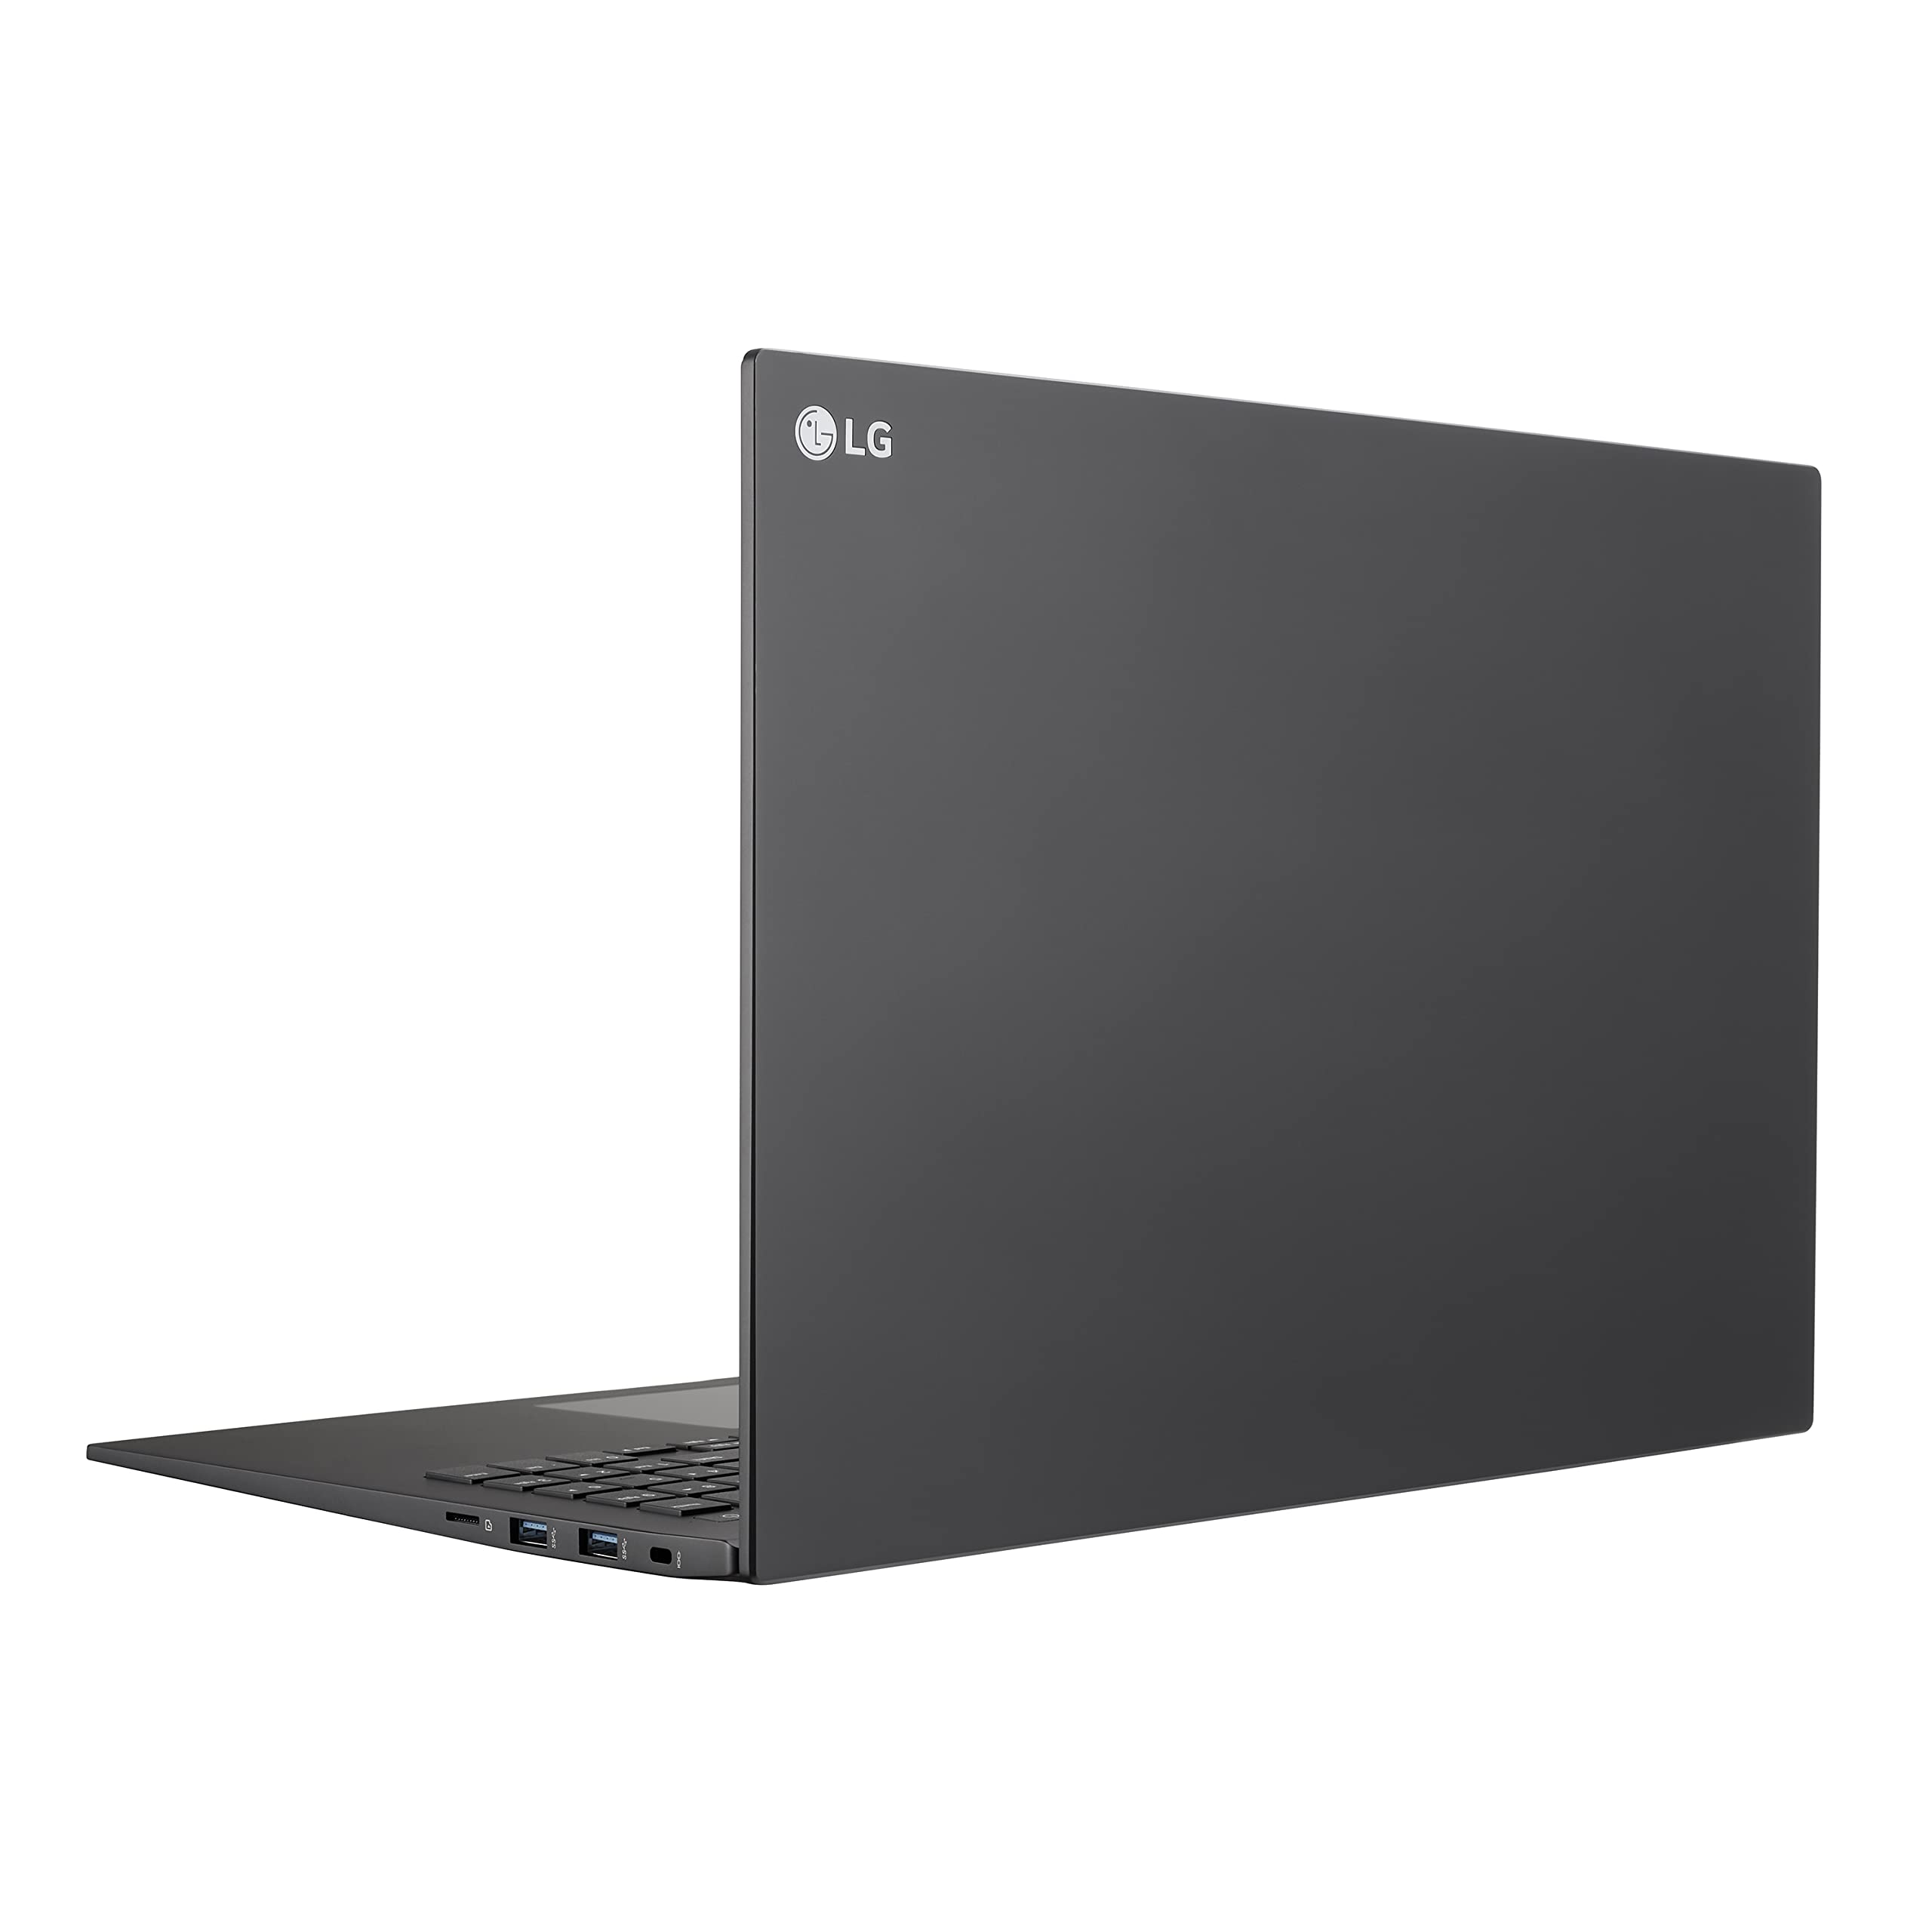 LG UltraPC 16U70R-K.AAS7U1 Thin and Lightweight Laptop,Gray